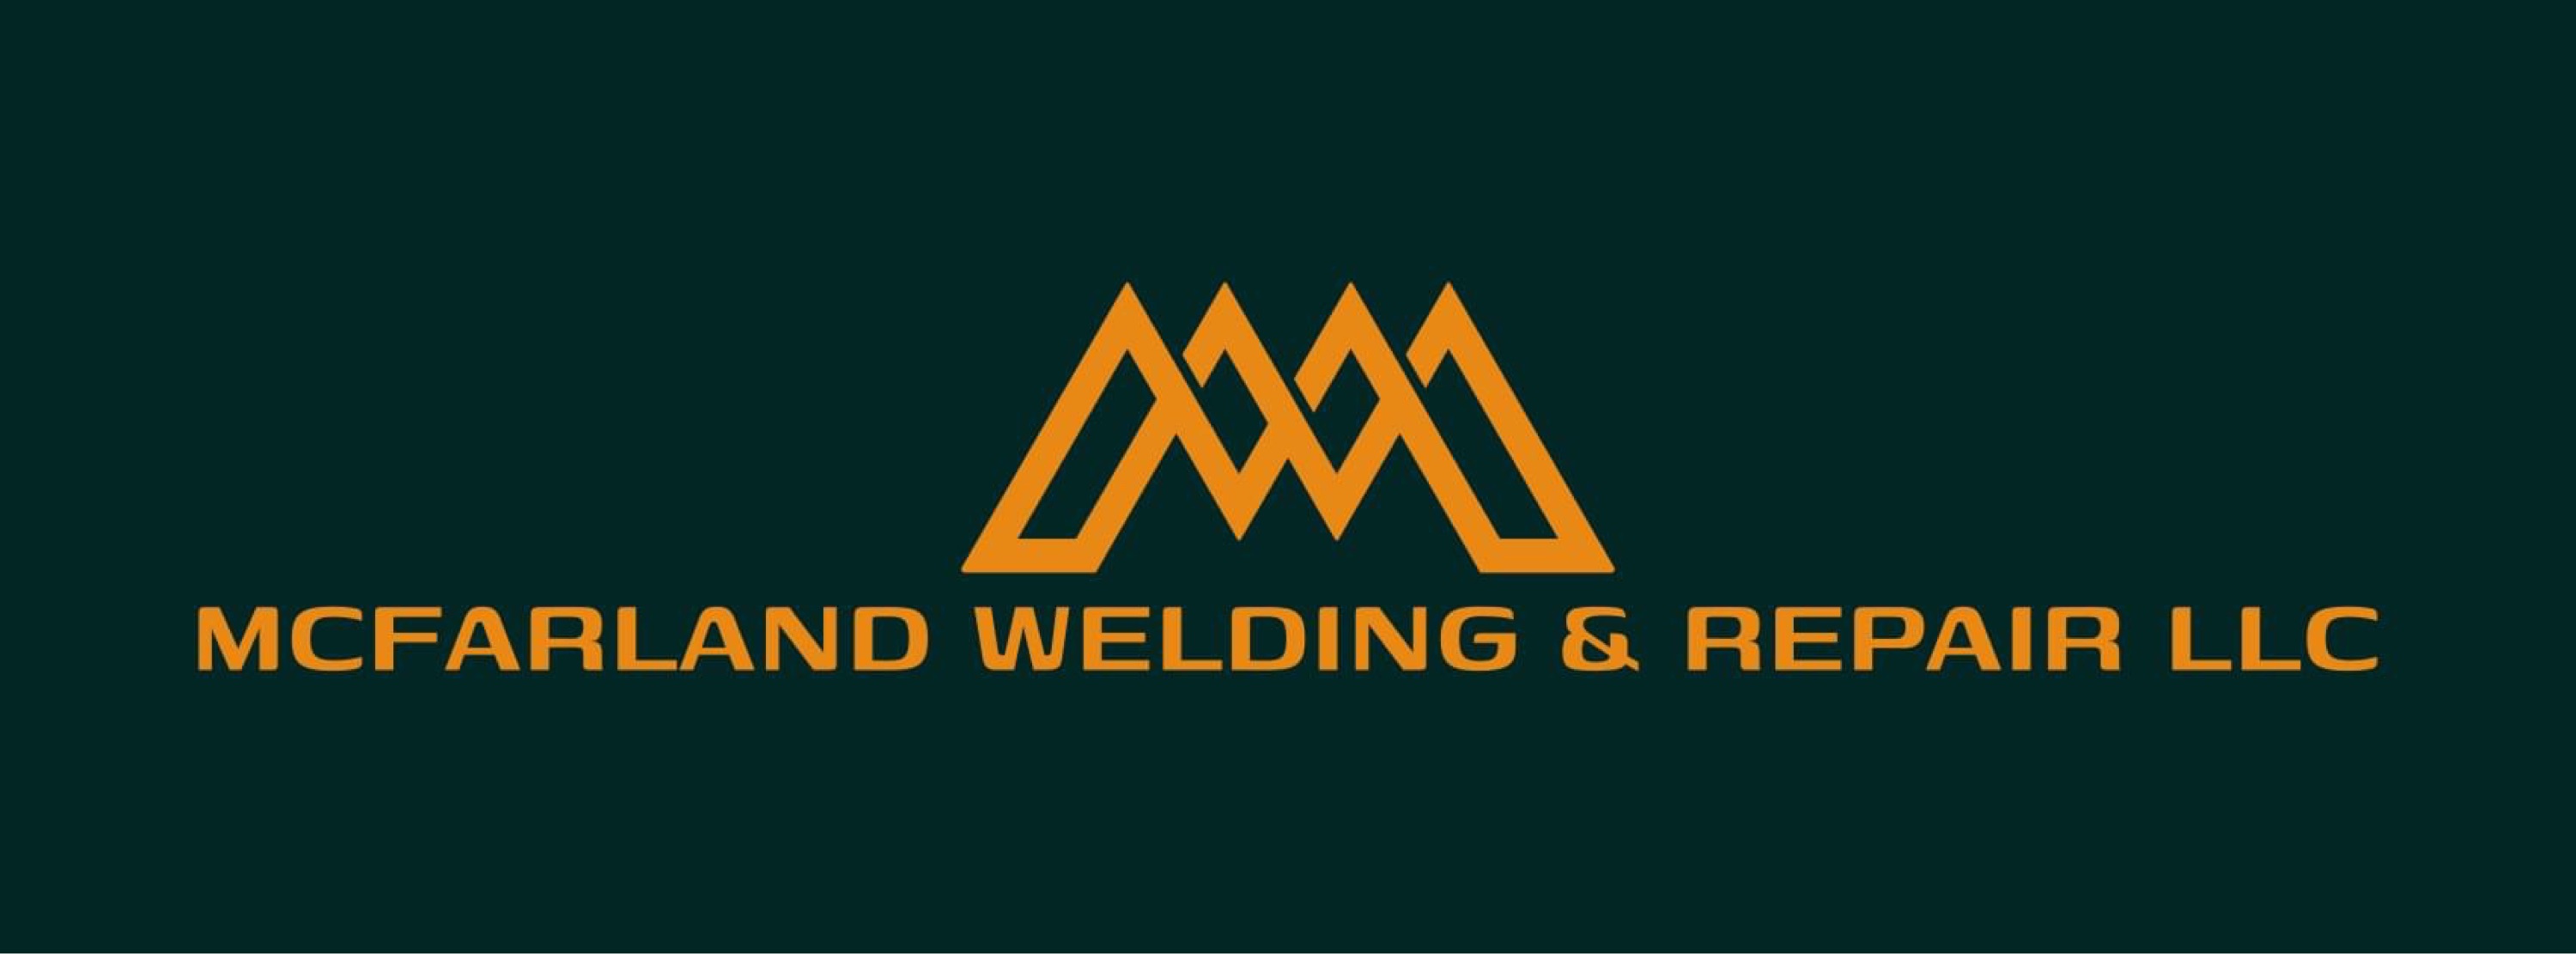 McFarland Welding & Repair, LLC Logo